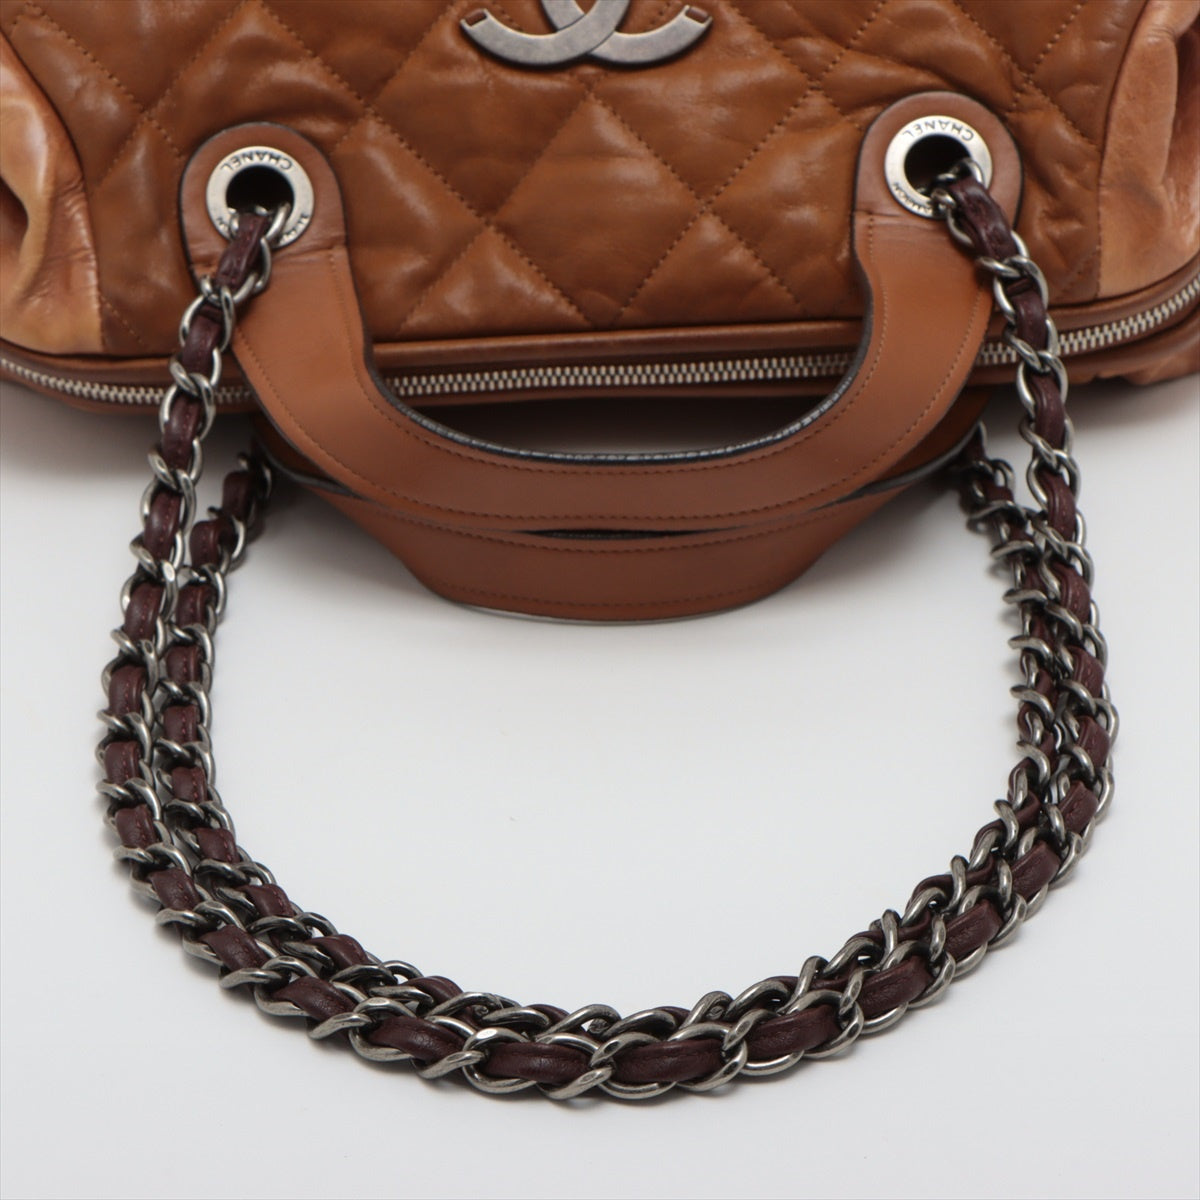 Chanel Matrasse Leather 2WAY Handbag Brown Silver Gold  14th